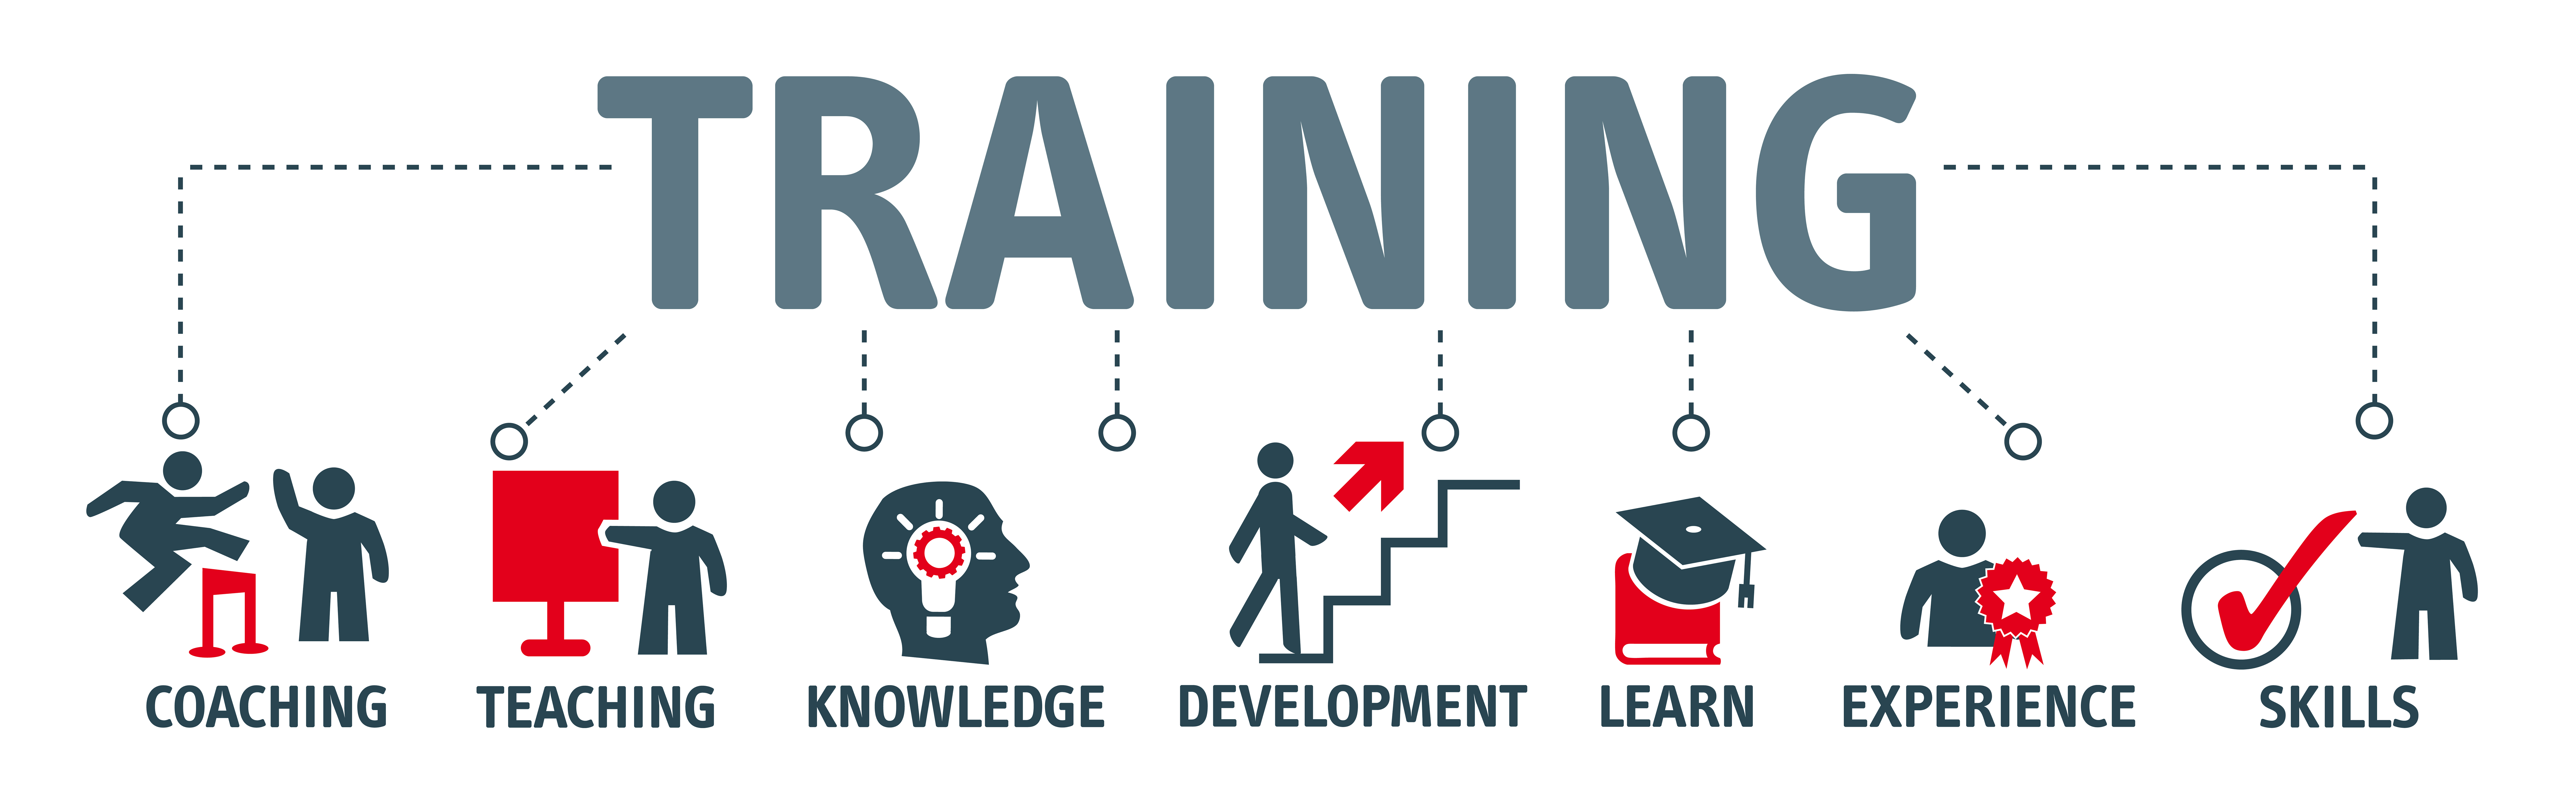 job training education definition